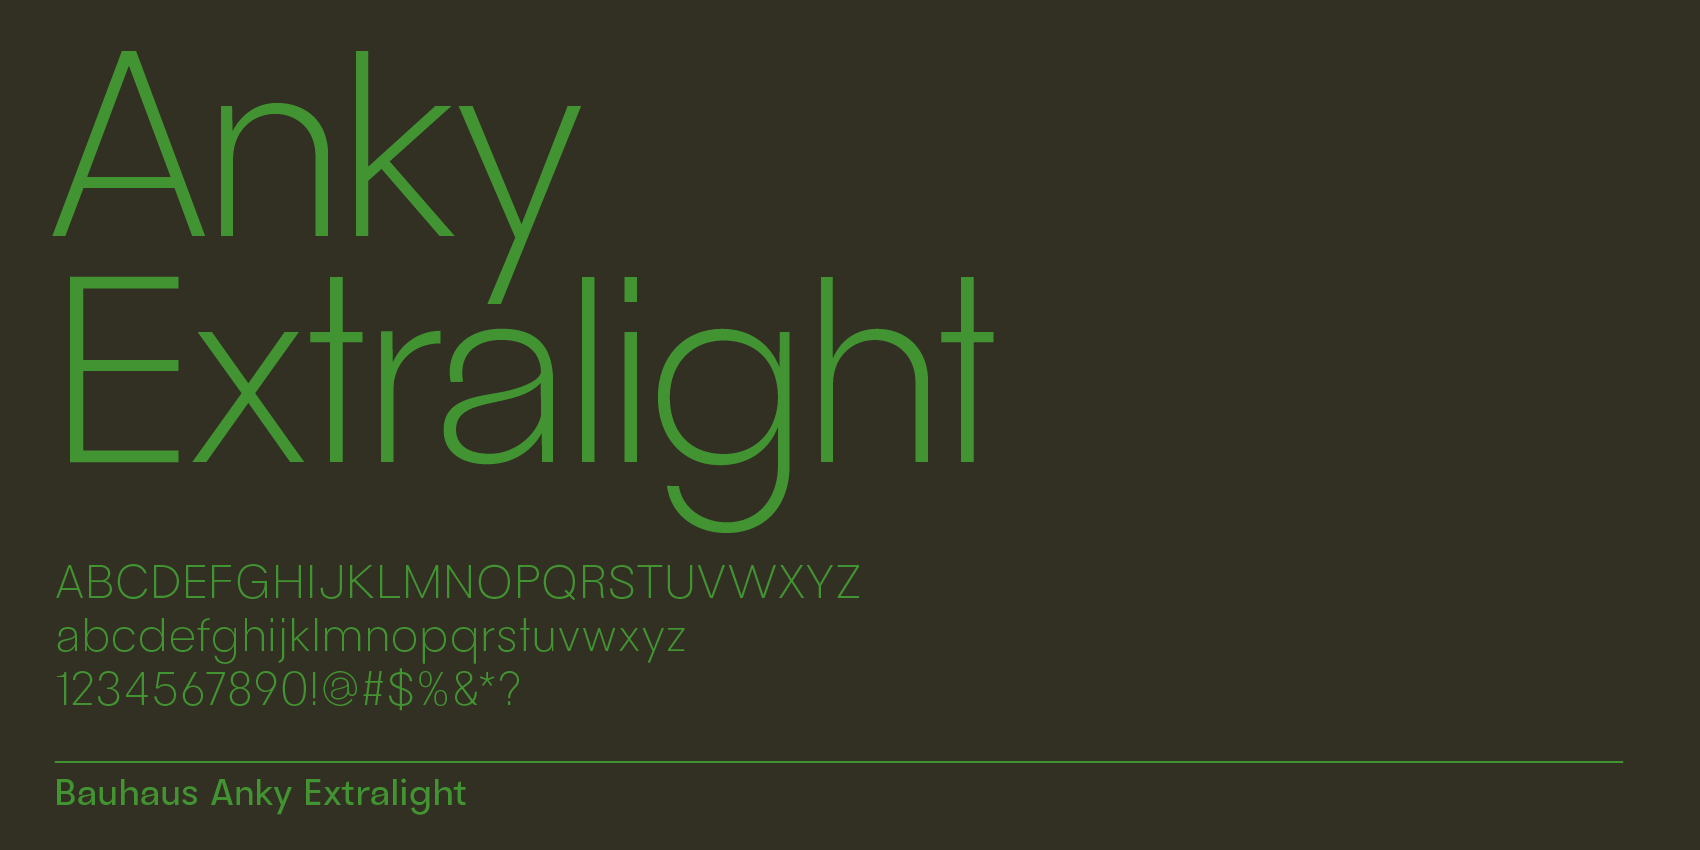 Anky Extralight font, friendly but minimal